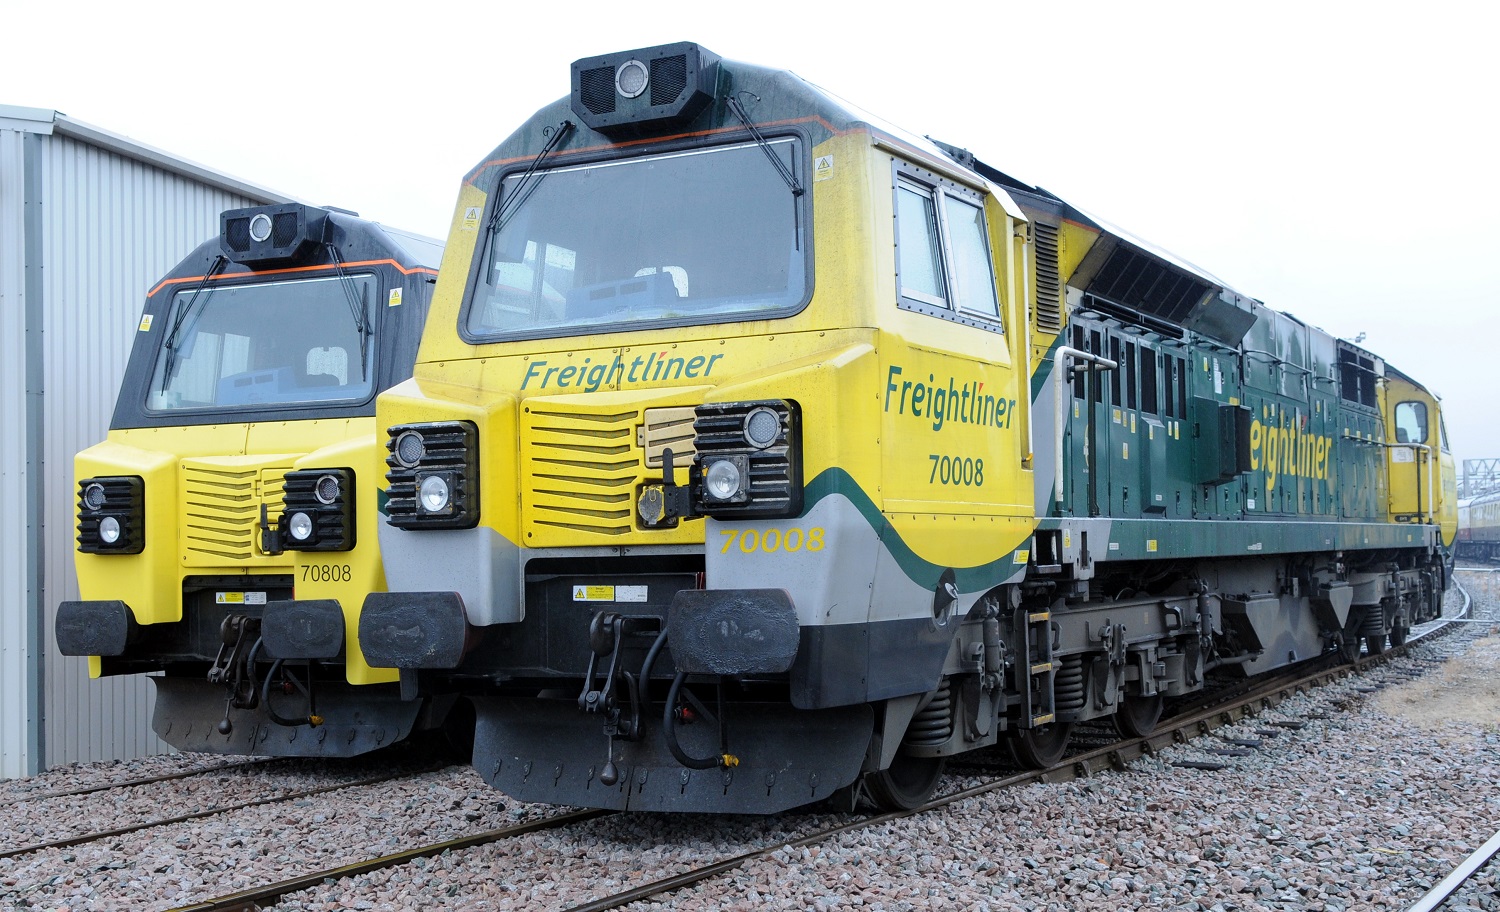 Pair of Freightliner Class 70 locomotives, Crewe 2019